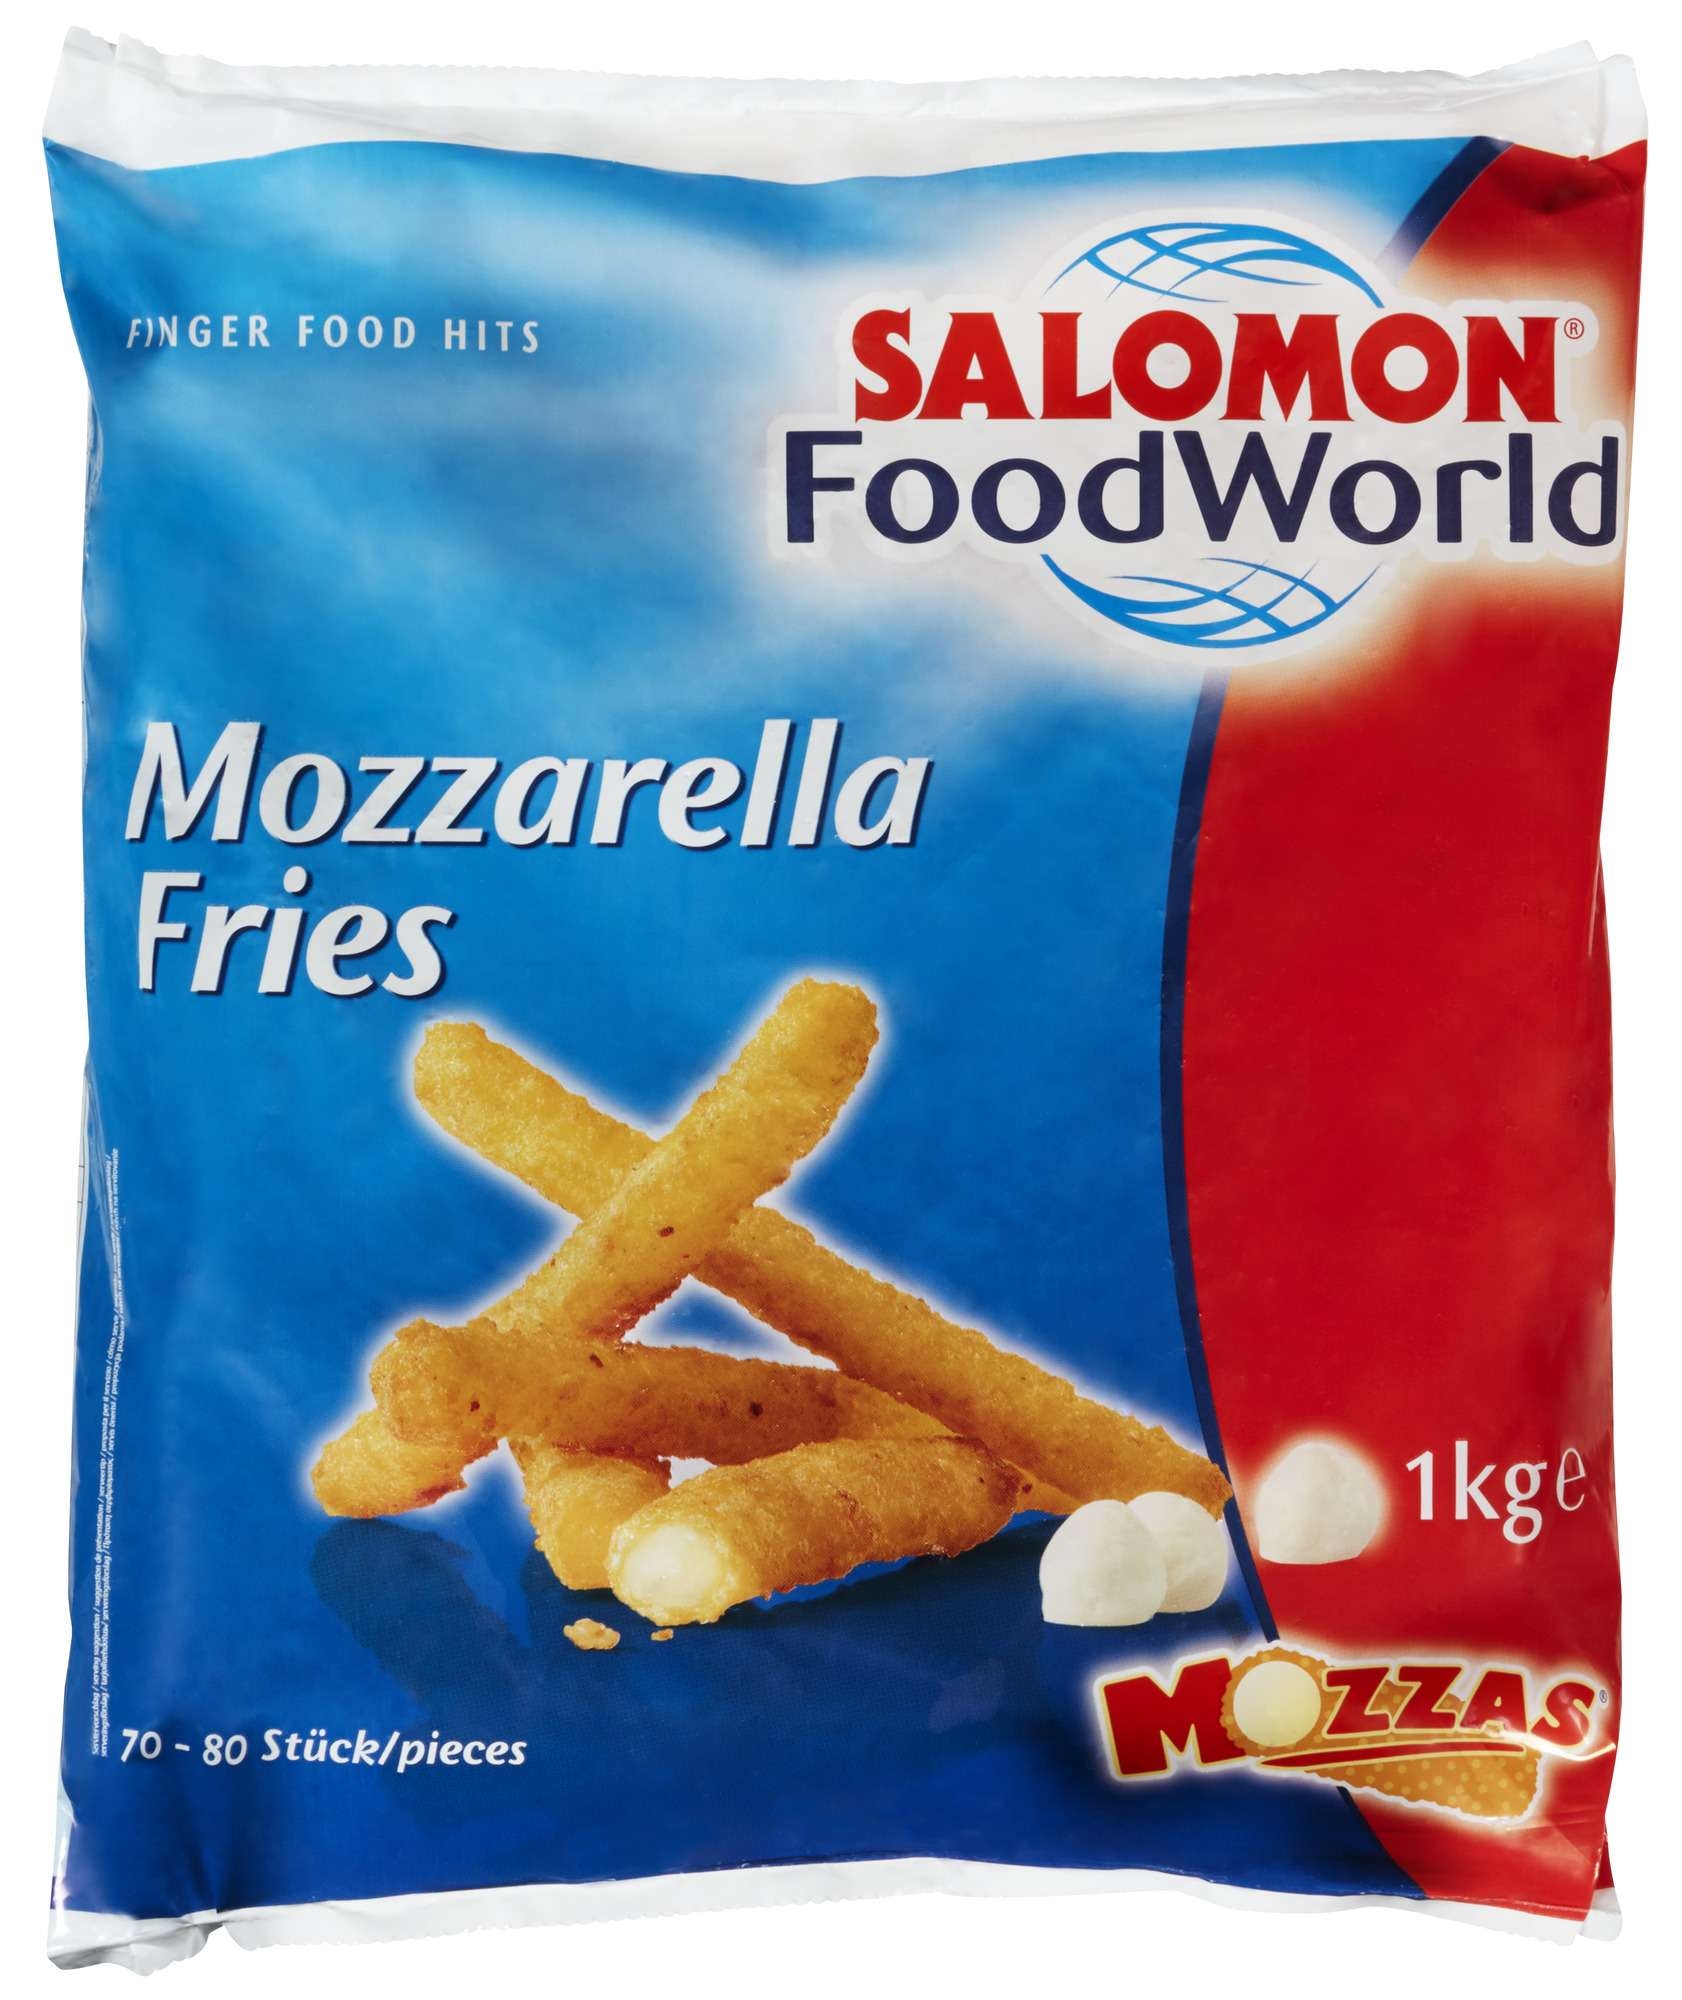 Mozzarella fries    1kg